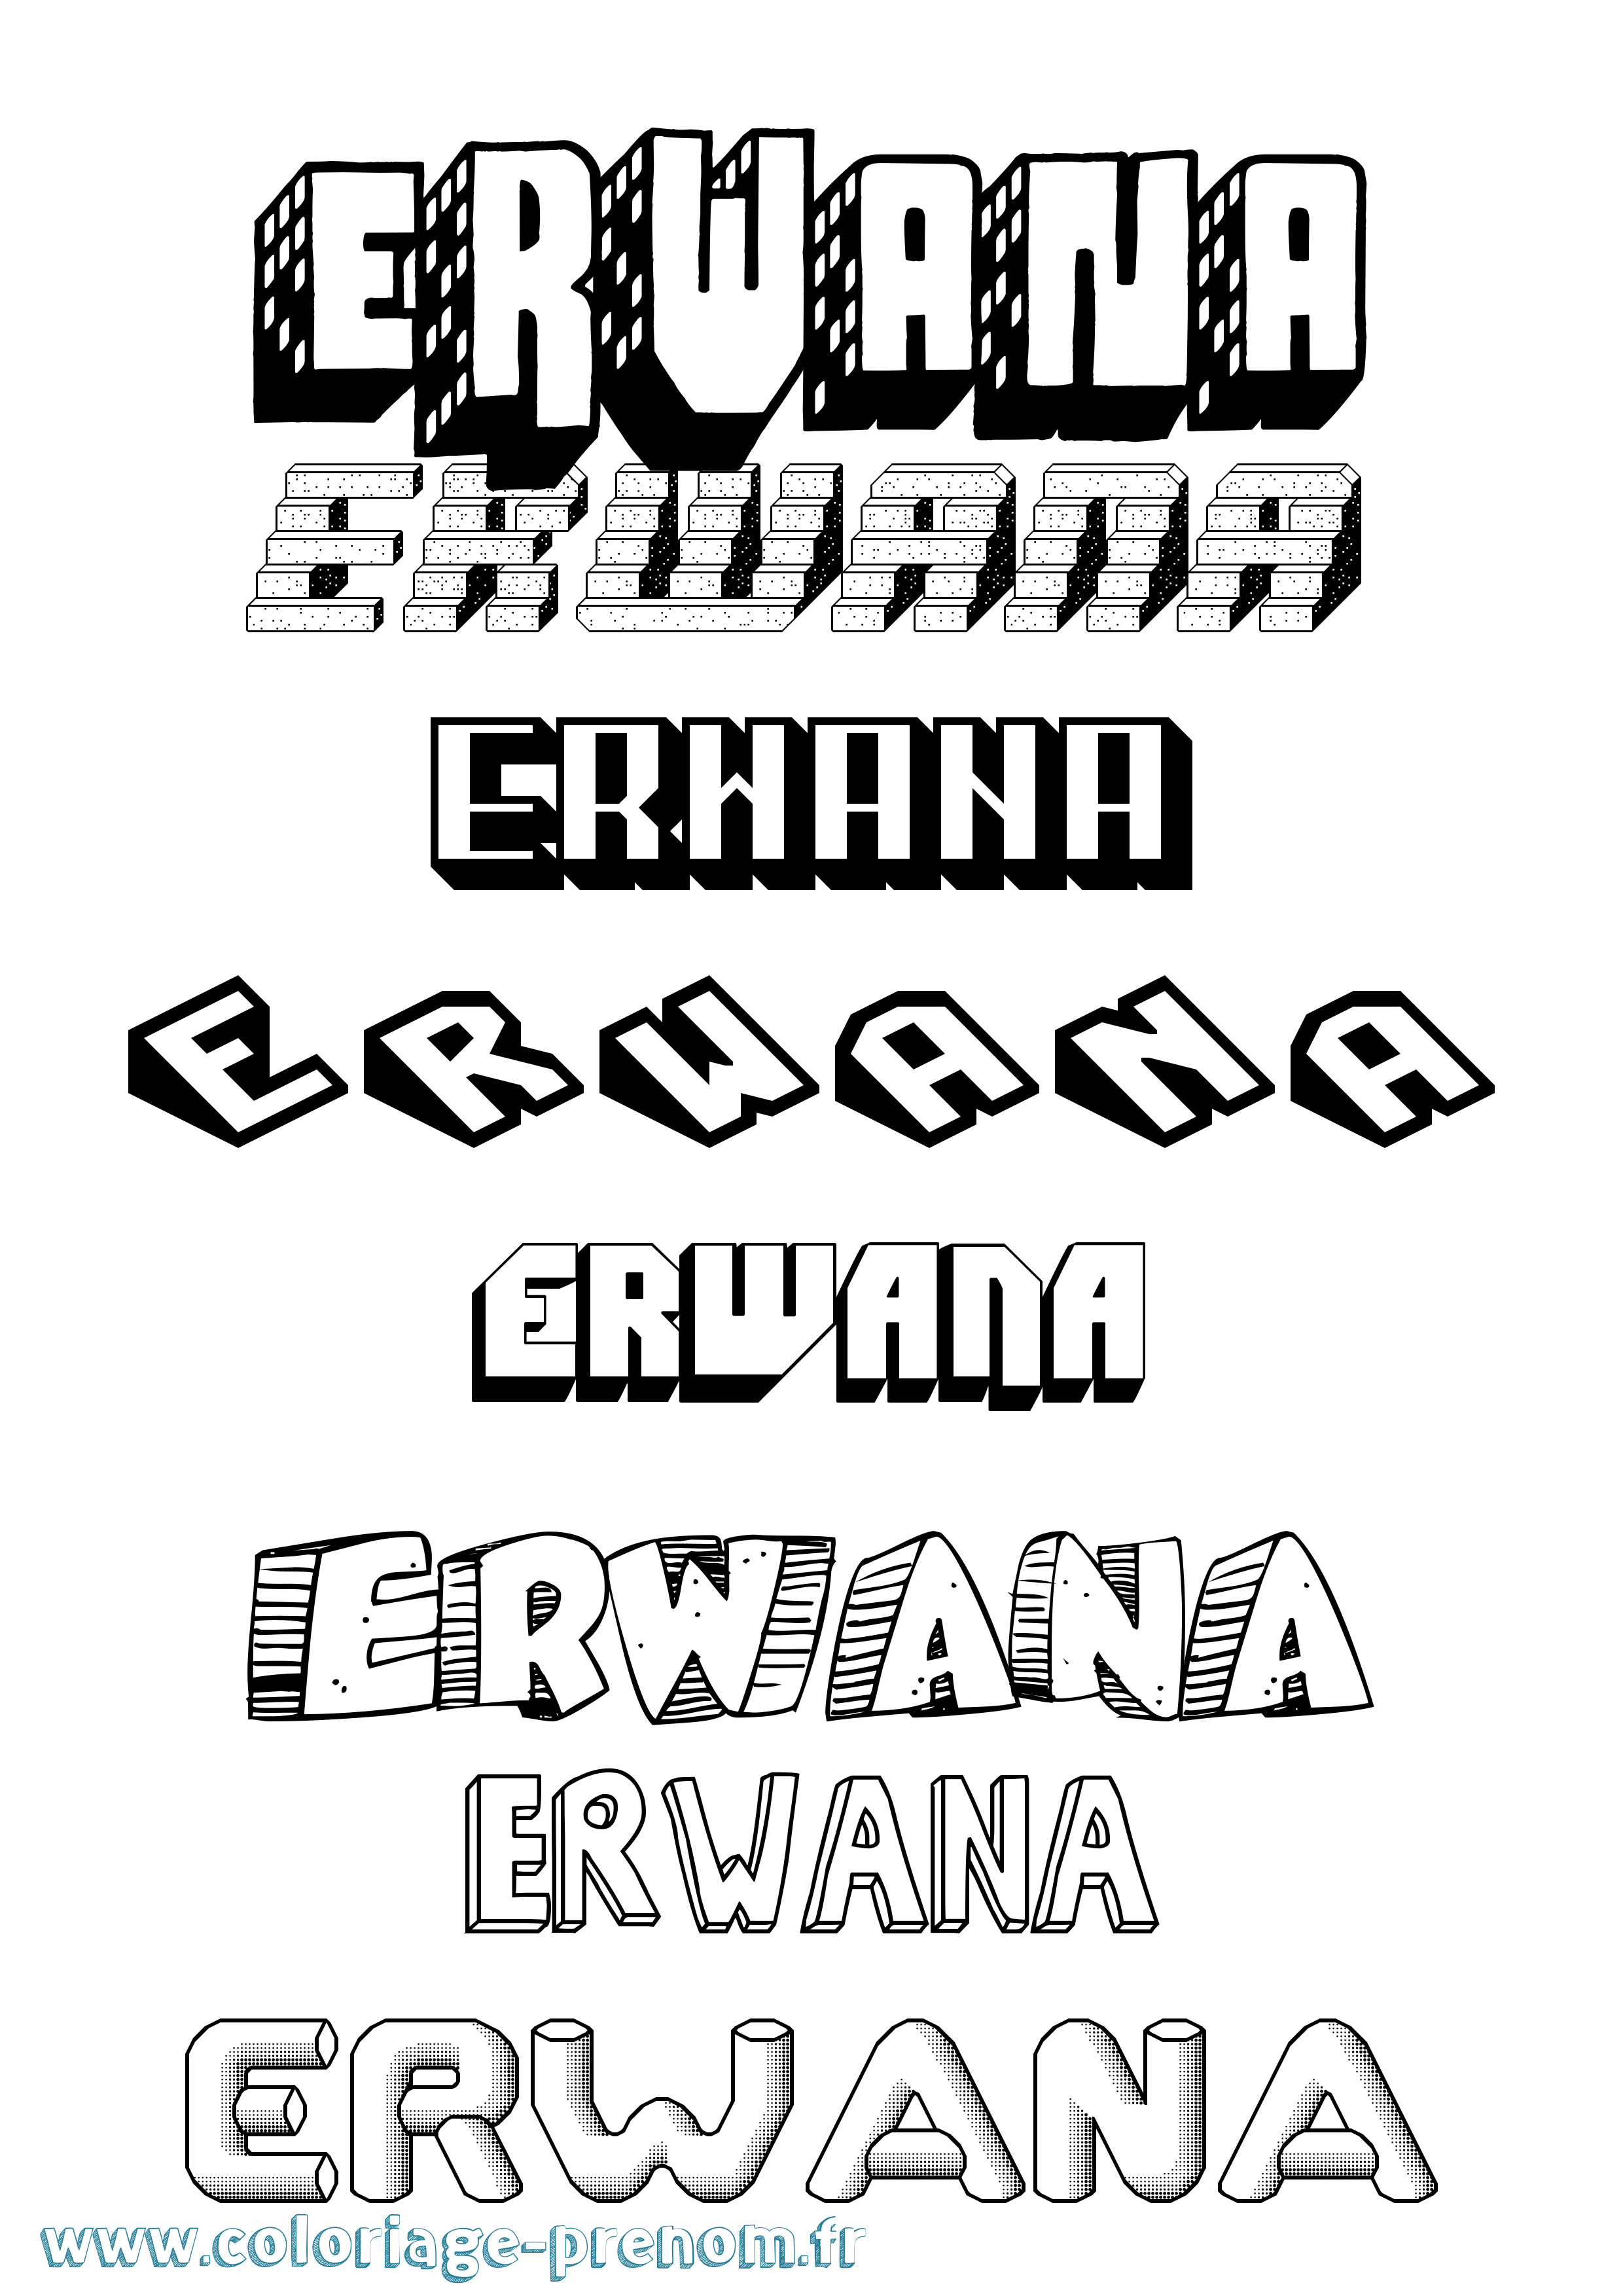 Coloriage prénom Erwana Effet 3D